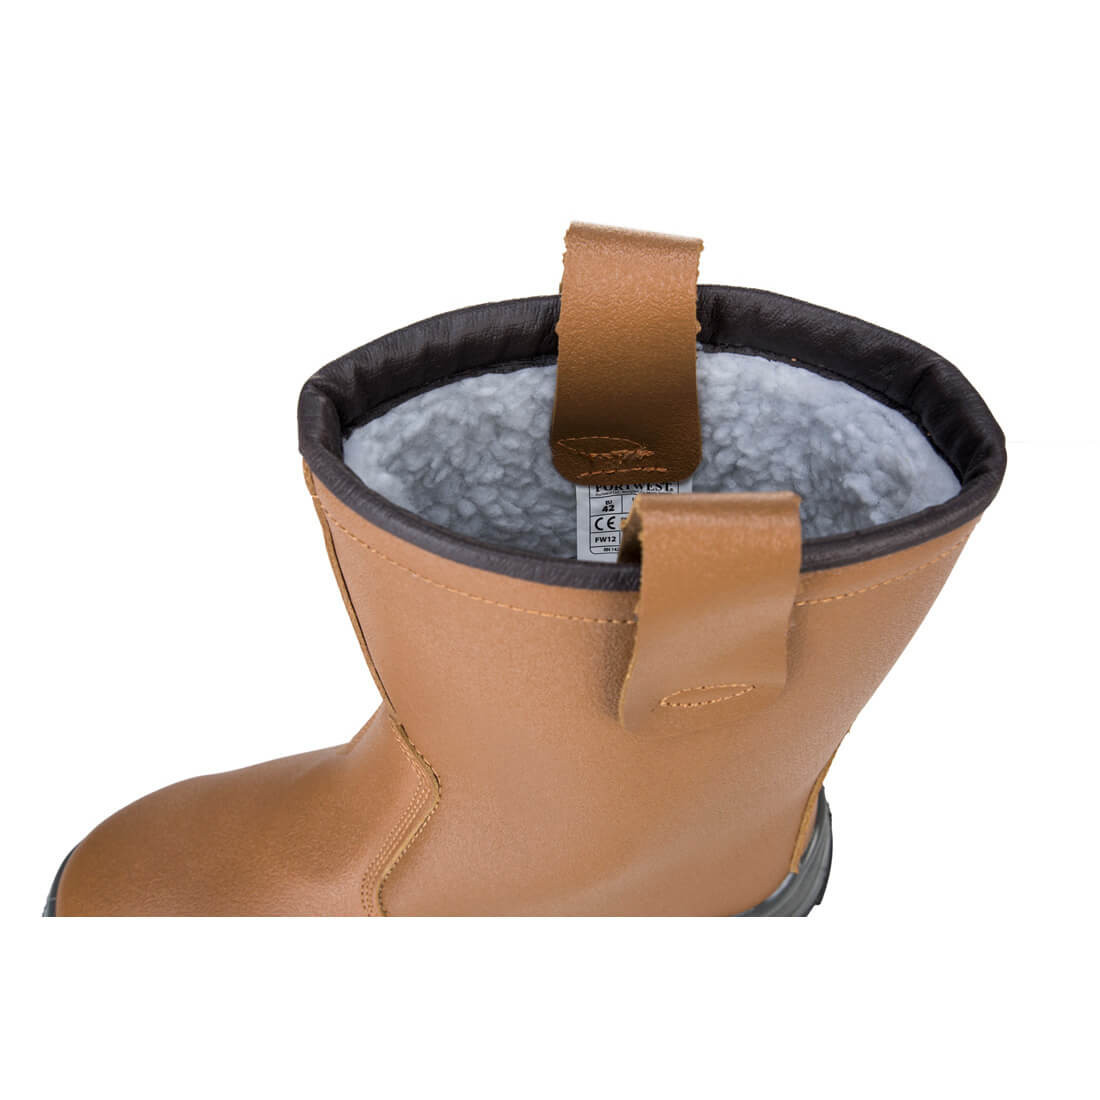 Cizma Steelite™ Rigger S1P CI - Incaltaminte de protectie | Bocanci, Pantofi, Sandale, Cizme